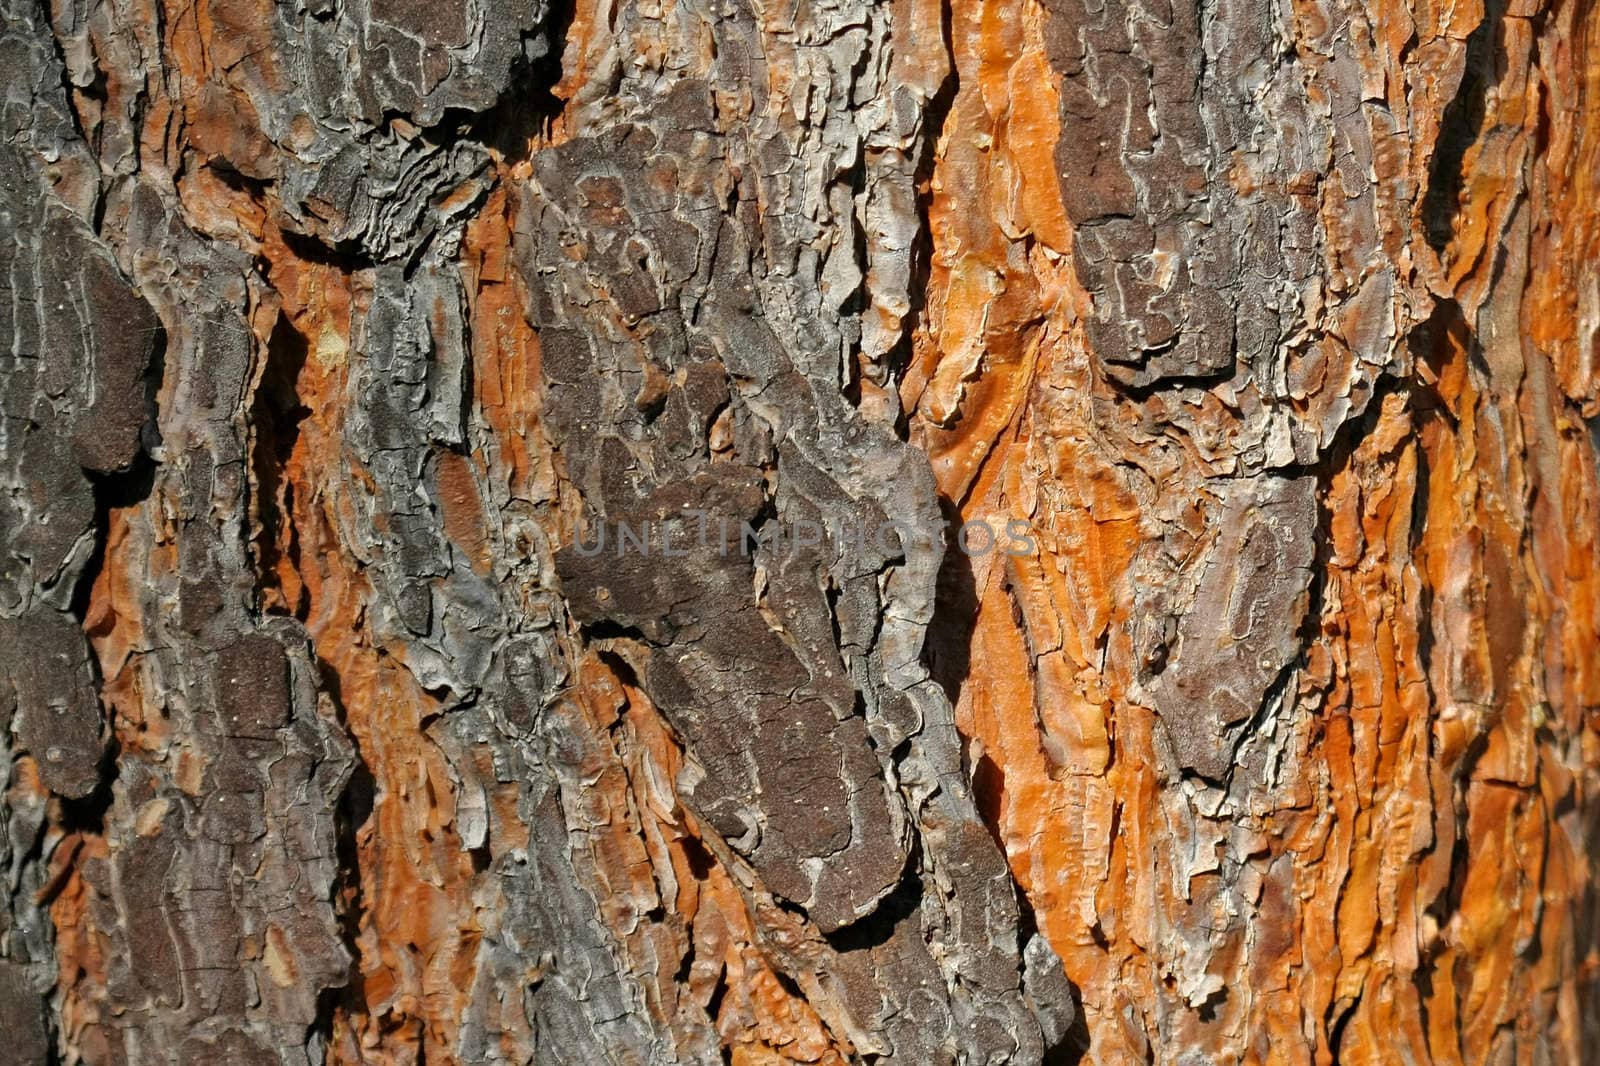 bark texture background